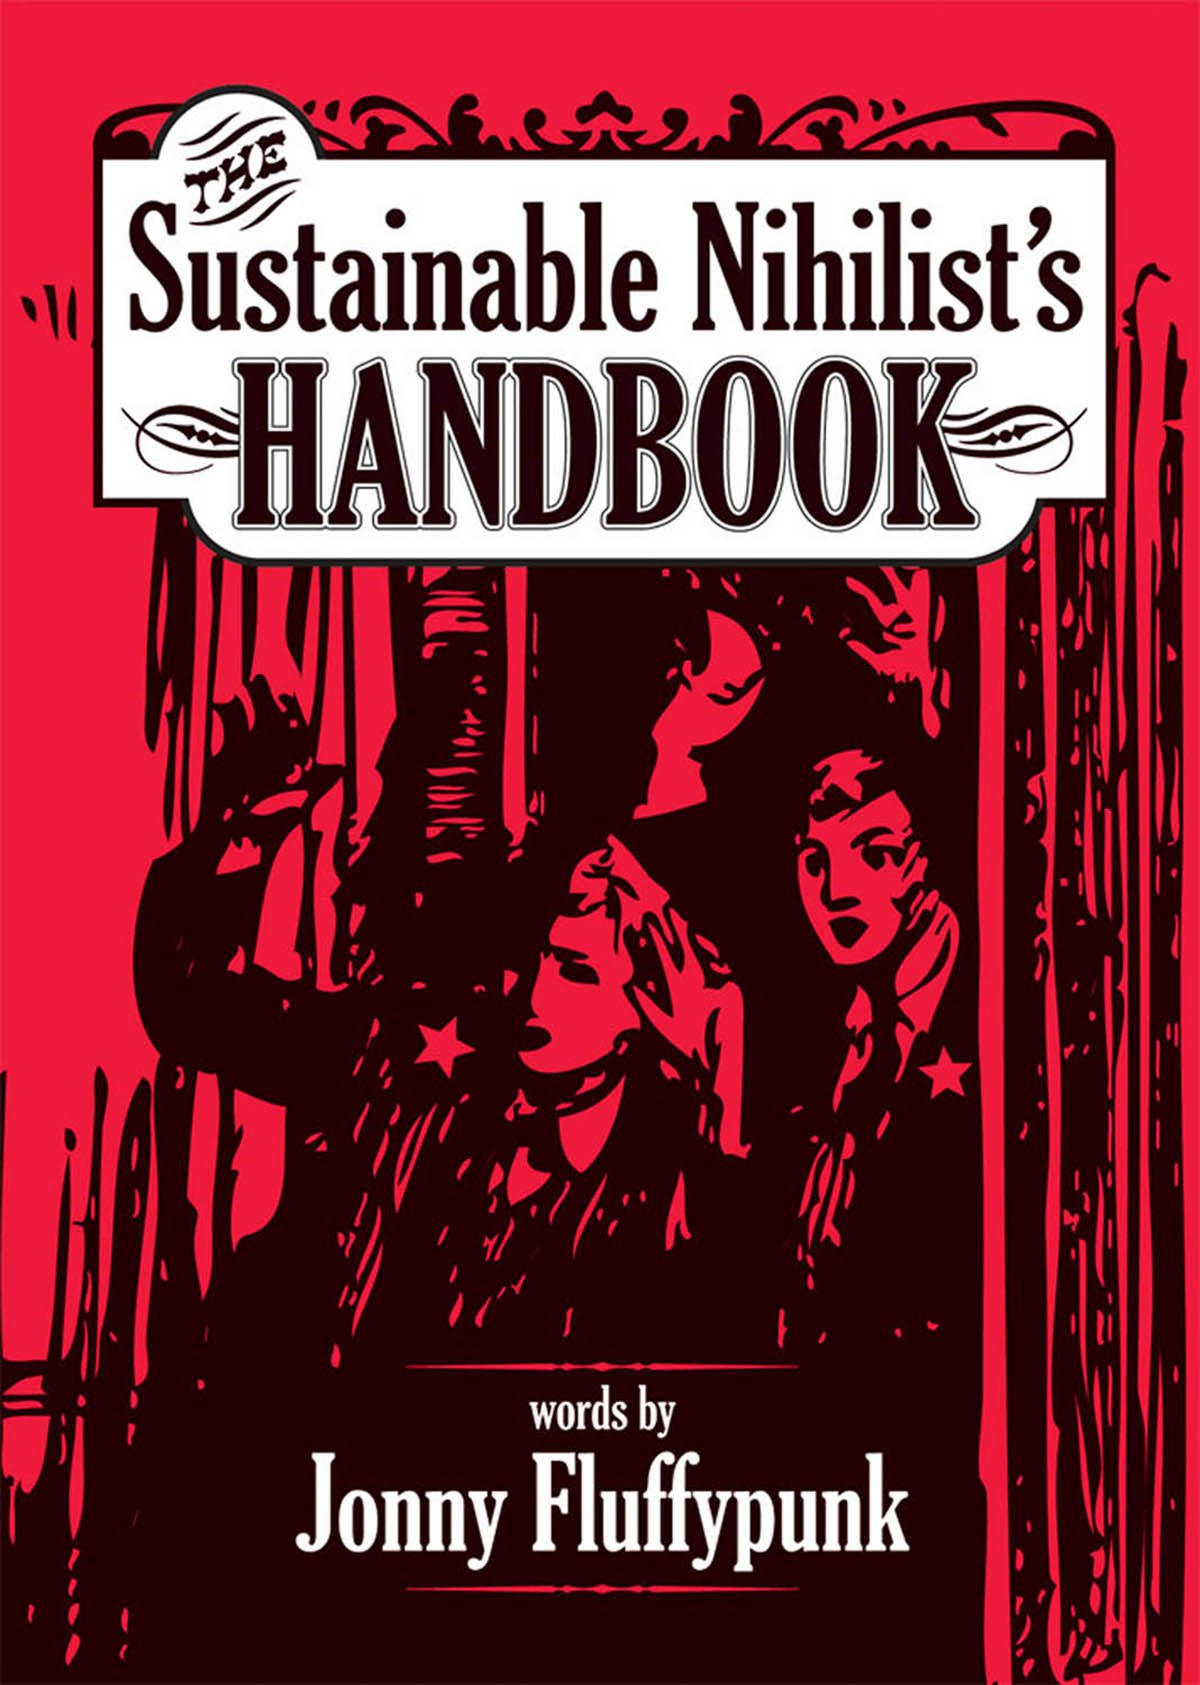 Image of The Sustainable Nihilist's Handbook by Jonny Fluffypunk